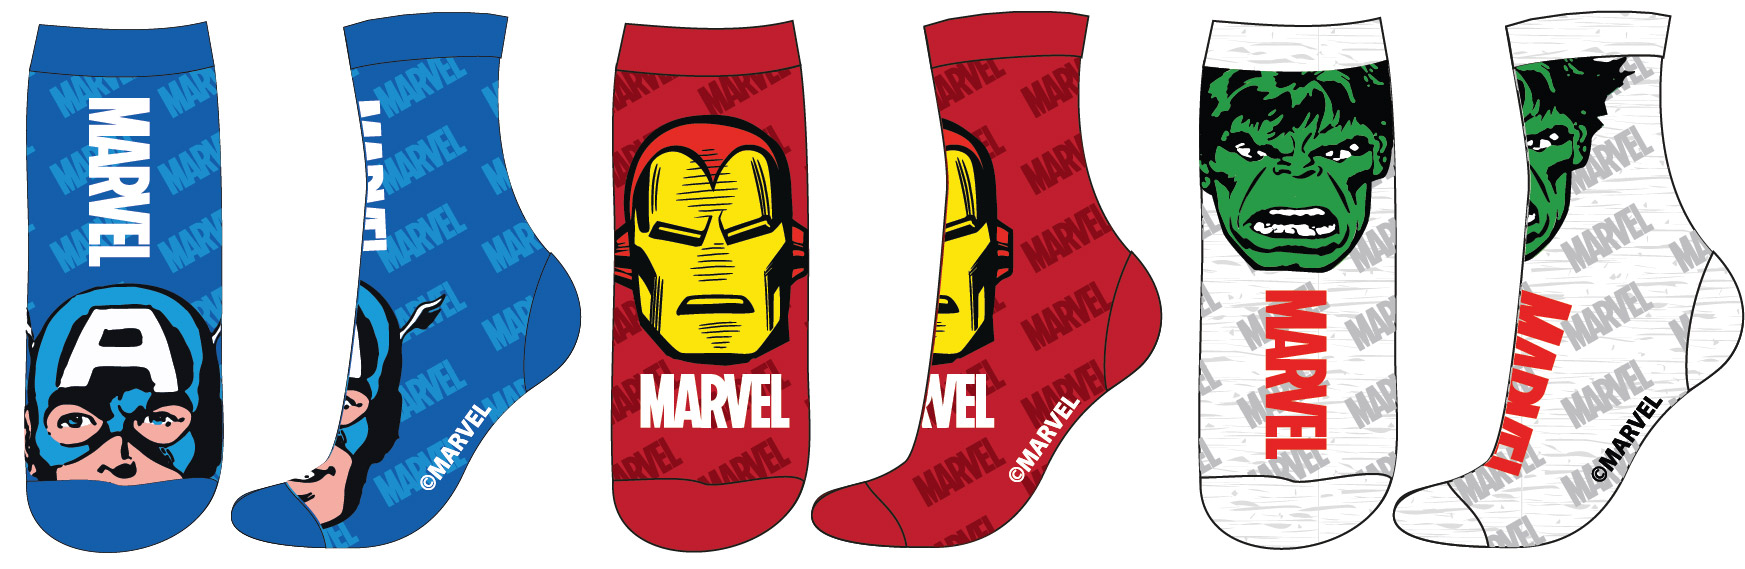 Avangers - licence Chlapecké ponožky - Avengers 5234308, mix barev Barva: Mix barev, Velikost: 23-26